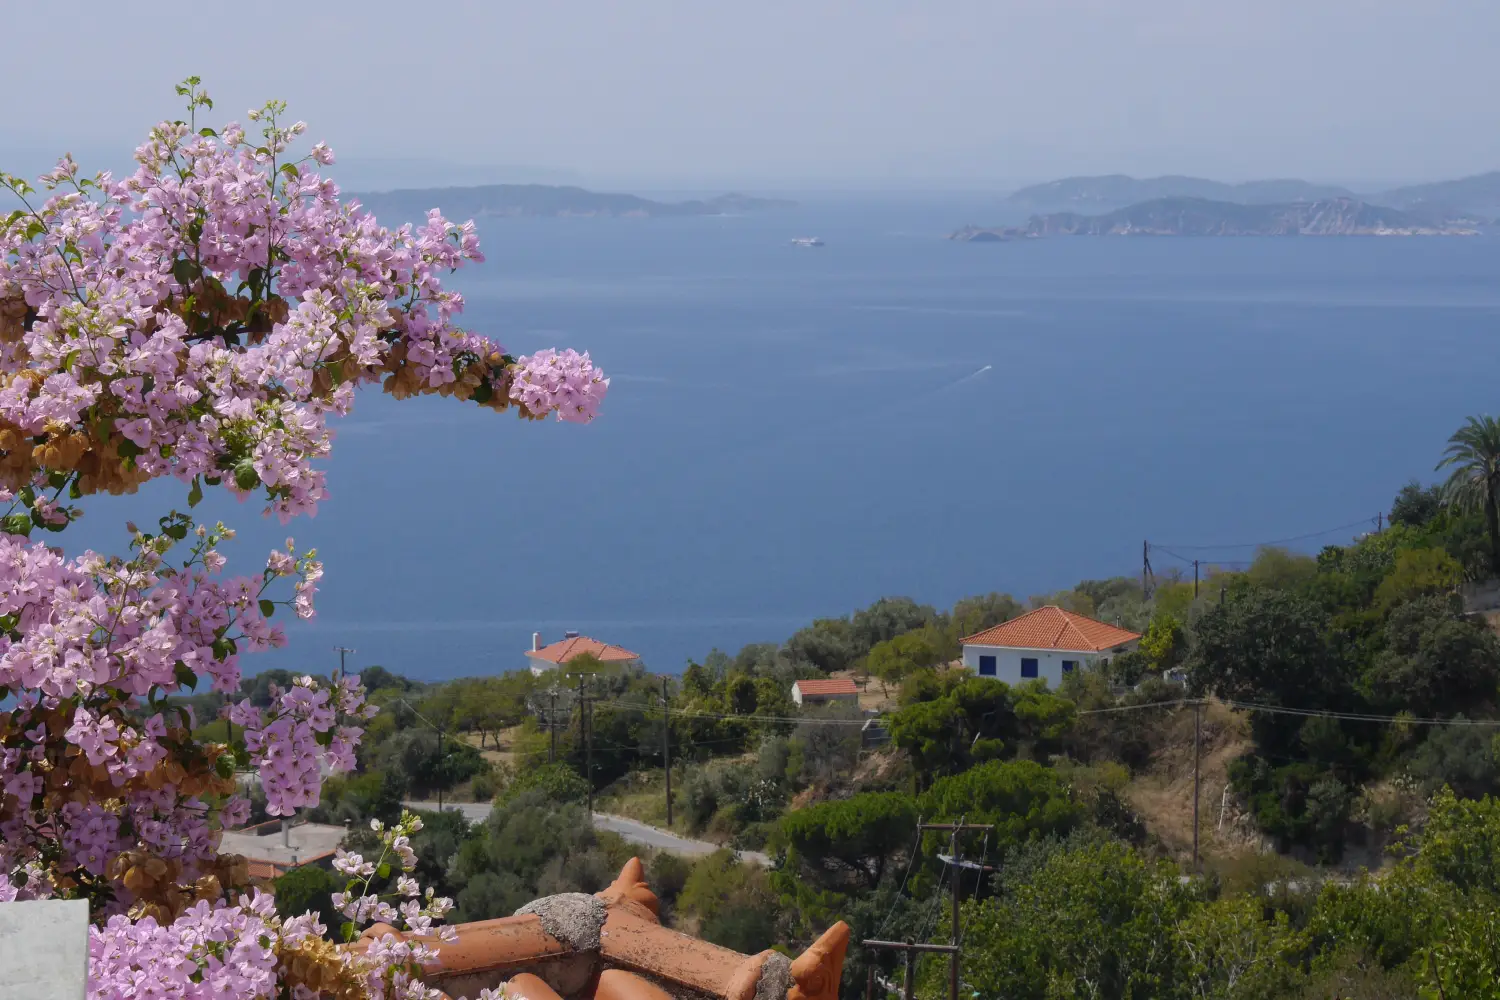 Ferry to Glossa (Skopelos) - Views of the sea and the city of Glossa on the island of Skopelos, Greece.